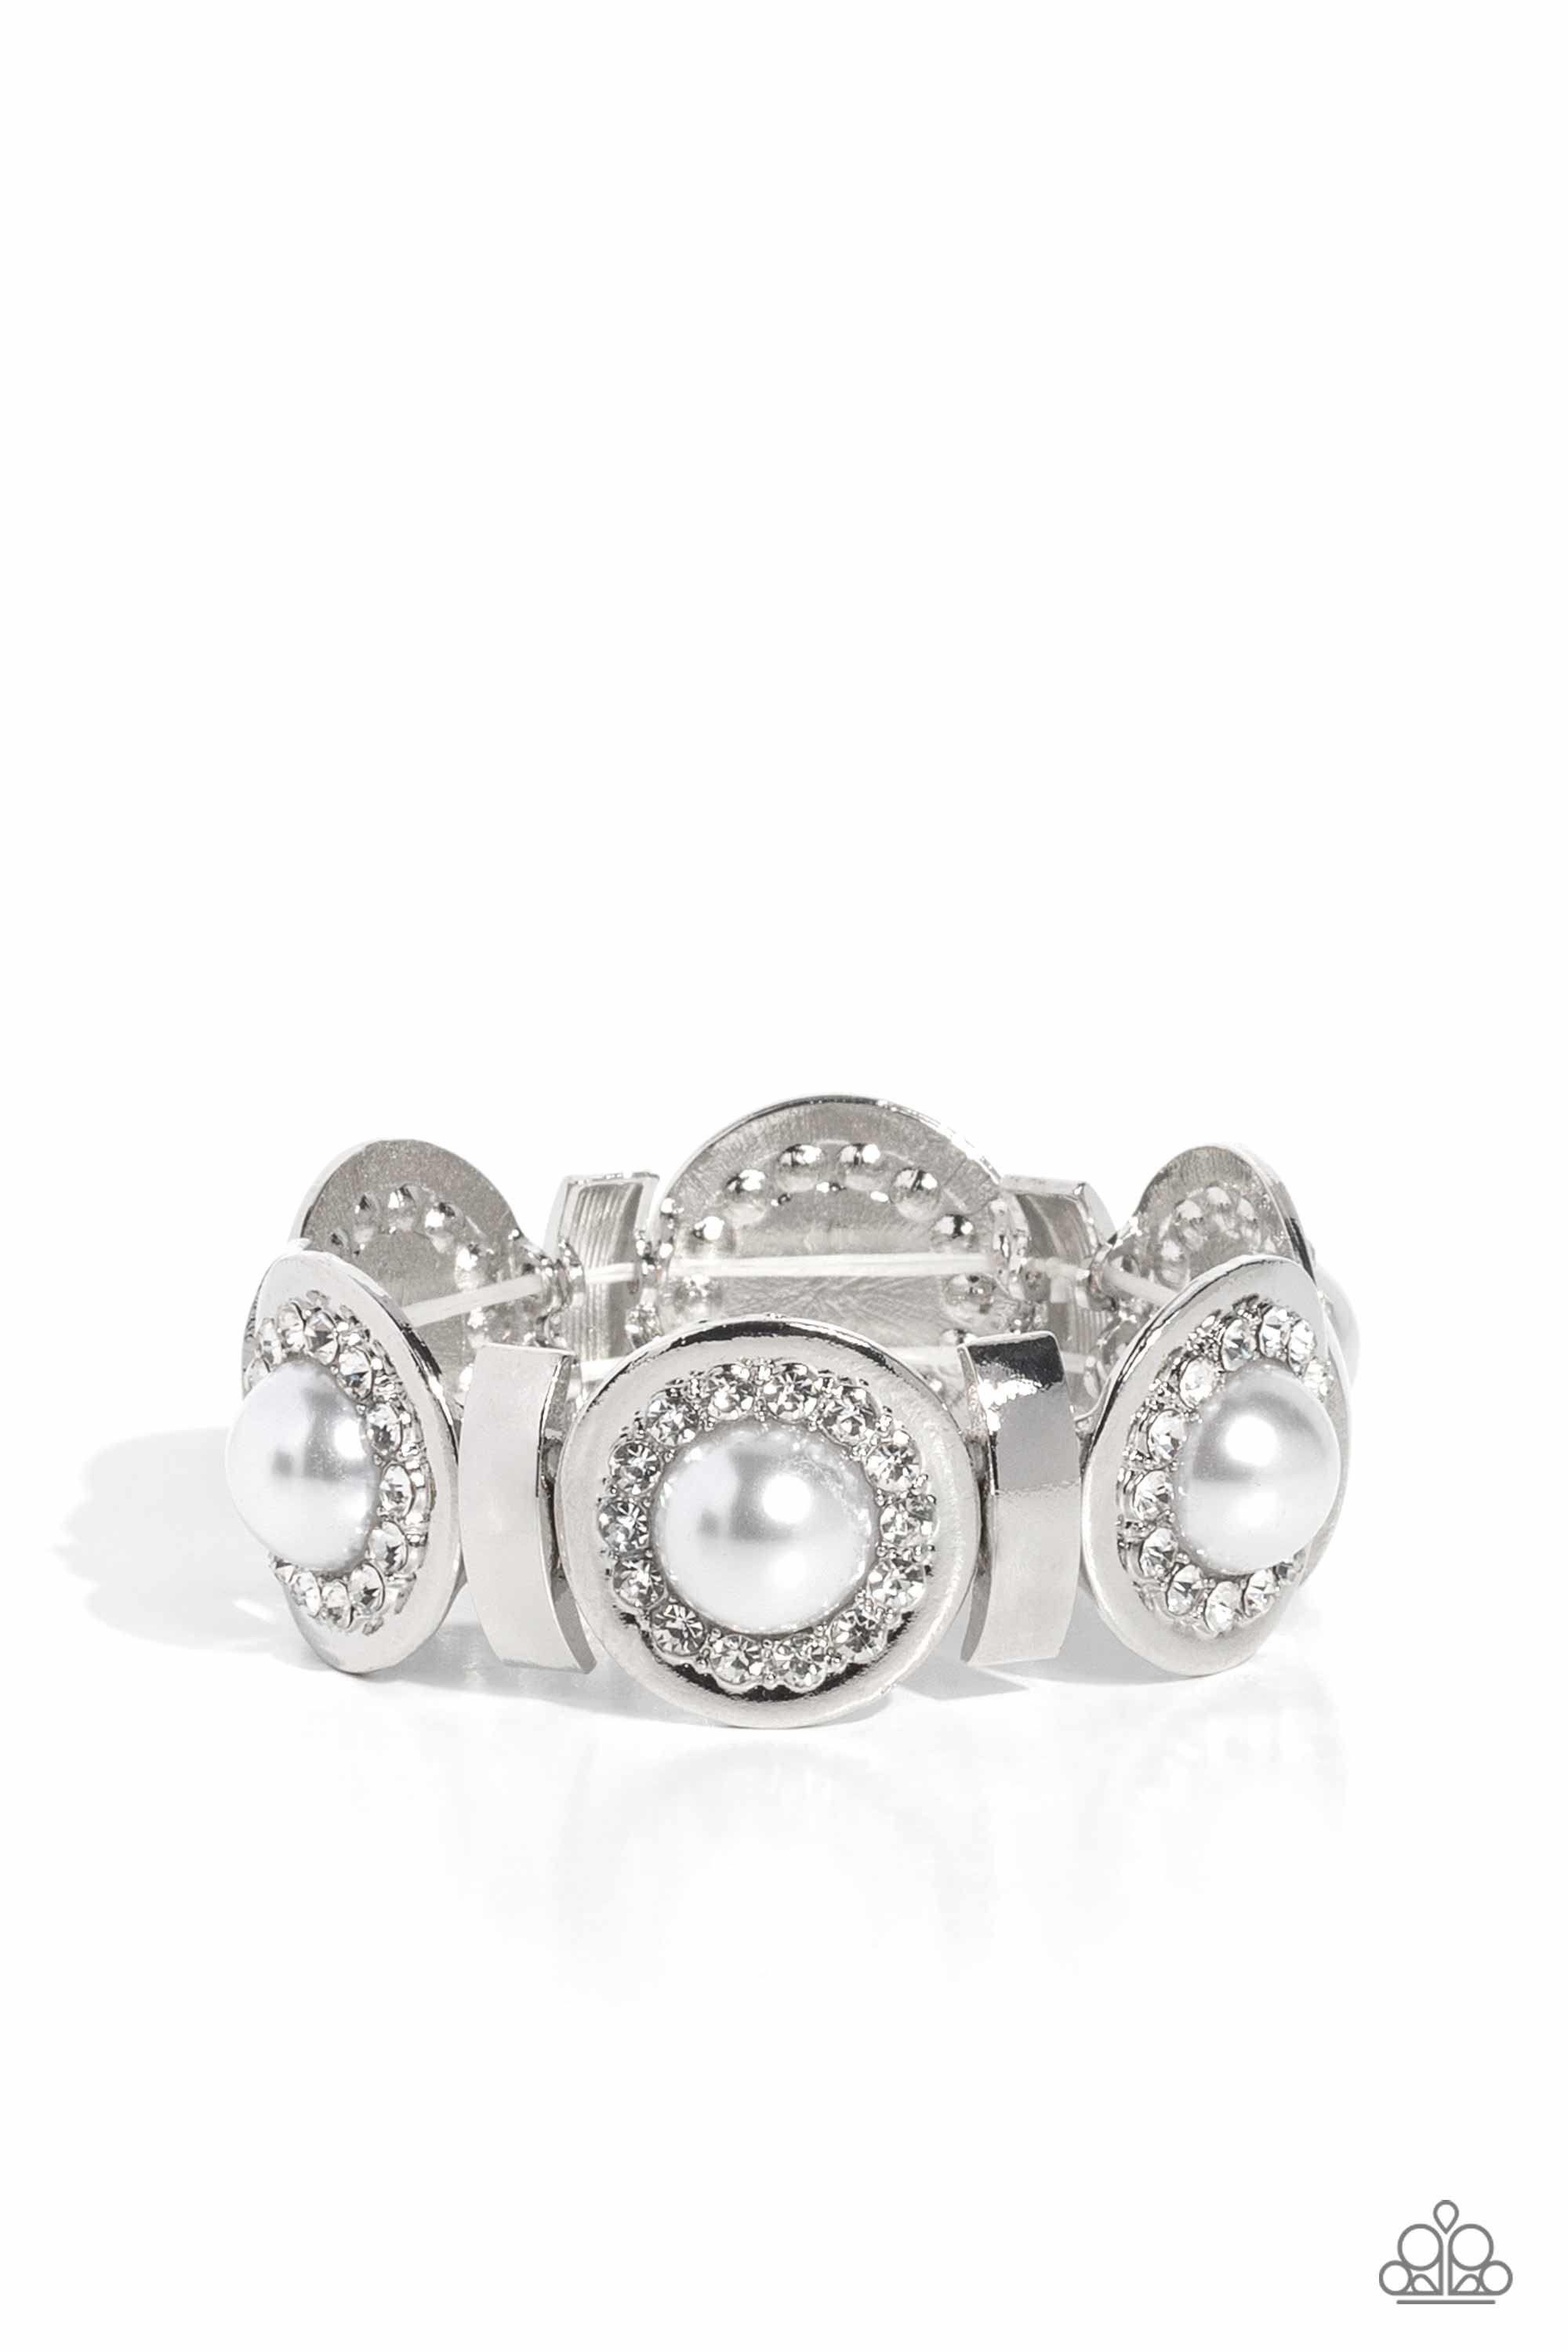 Summer Serenade White Pearl & Rhinestone Bracelet - Paparazzi Accessories- lightbox - CarasShop.com - $5 Jewelry by Cara Jewels